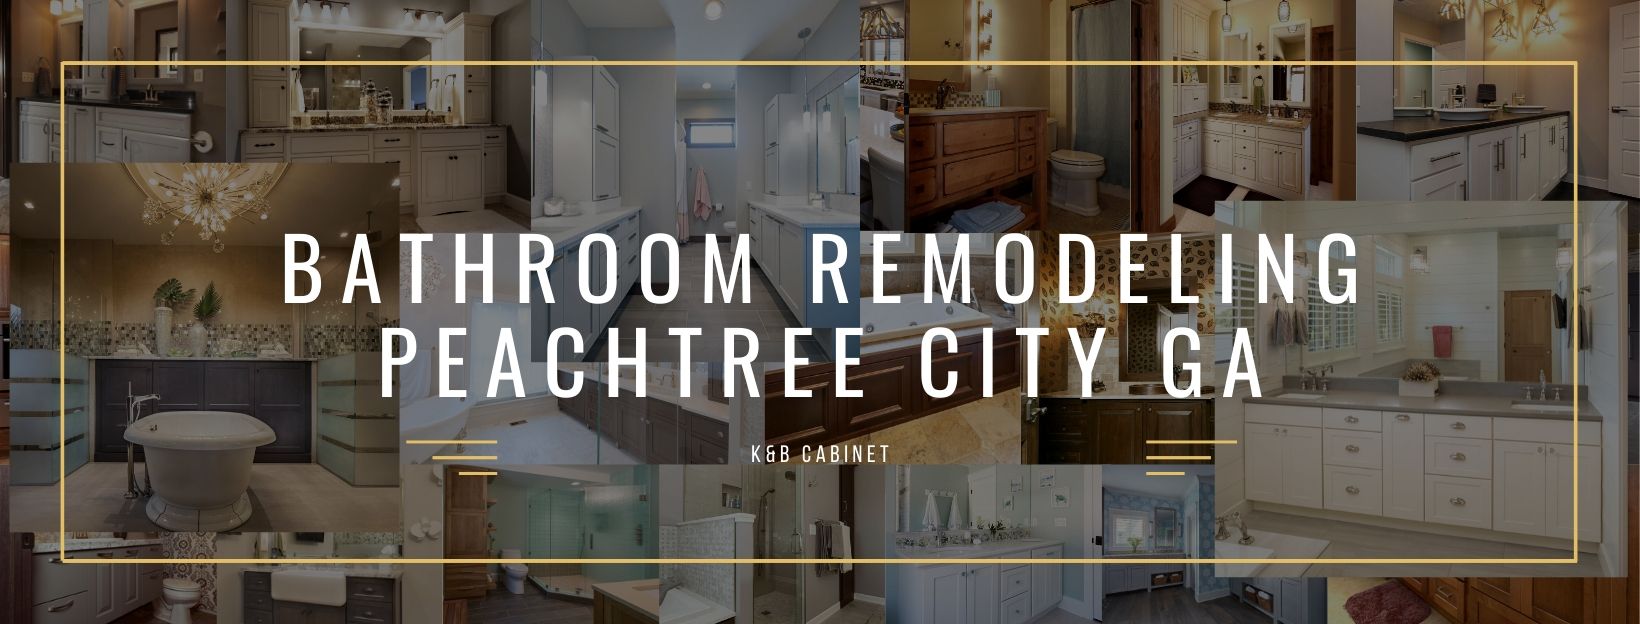 Bathroom Remodeling Peachtree City GA